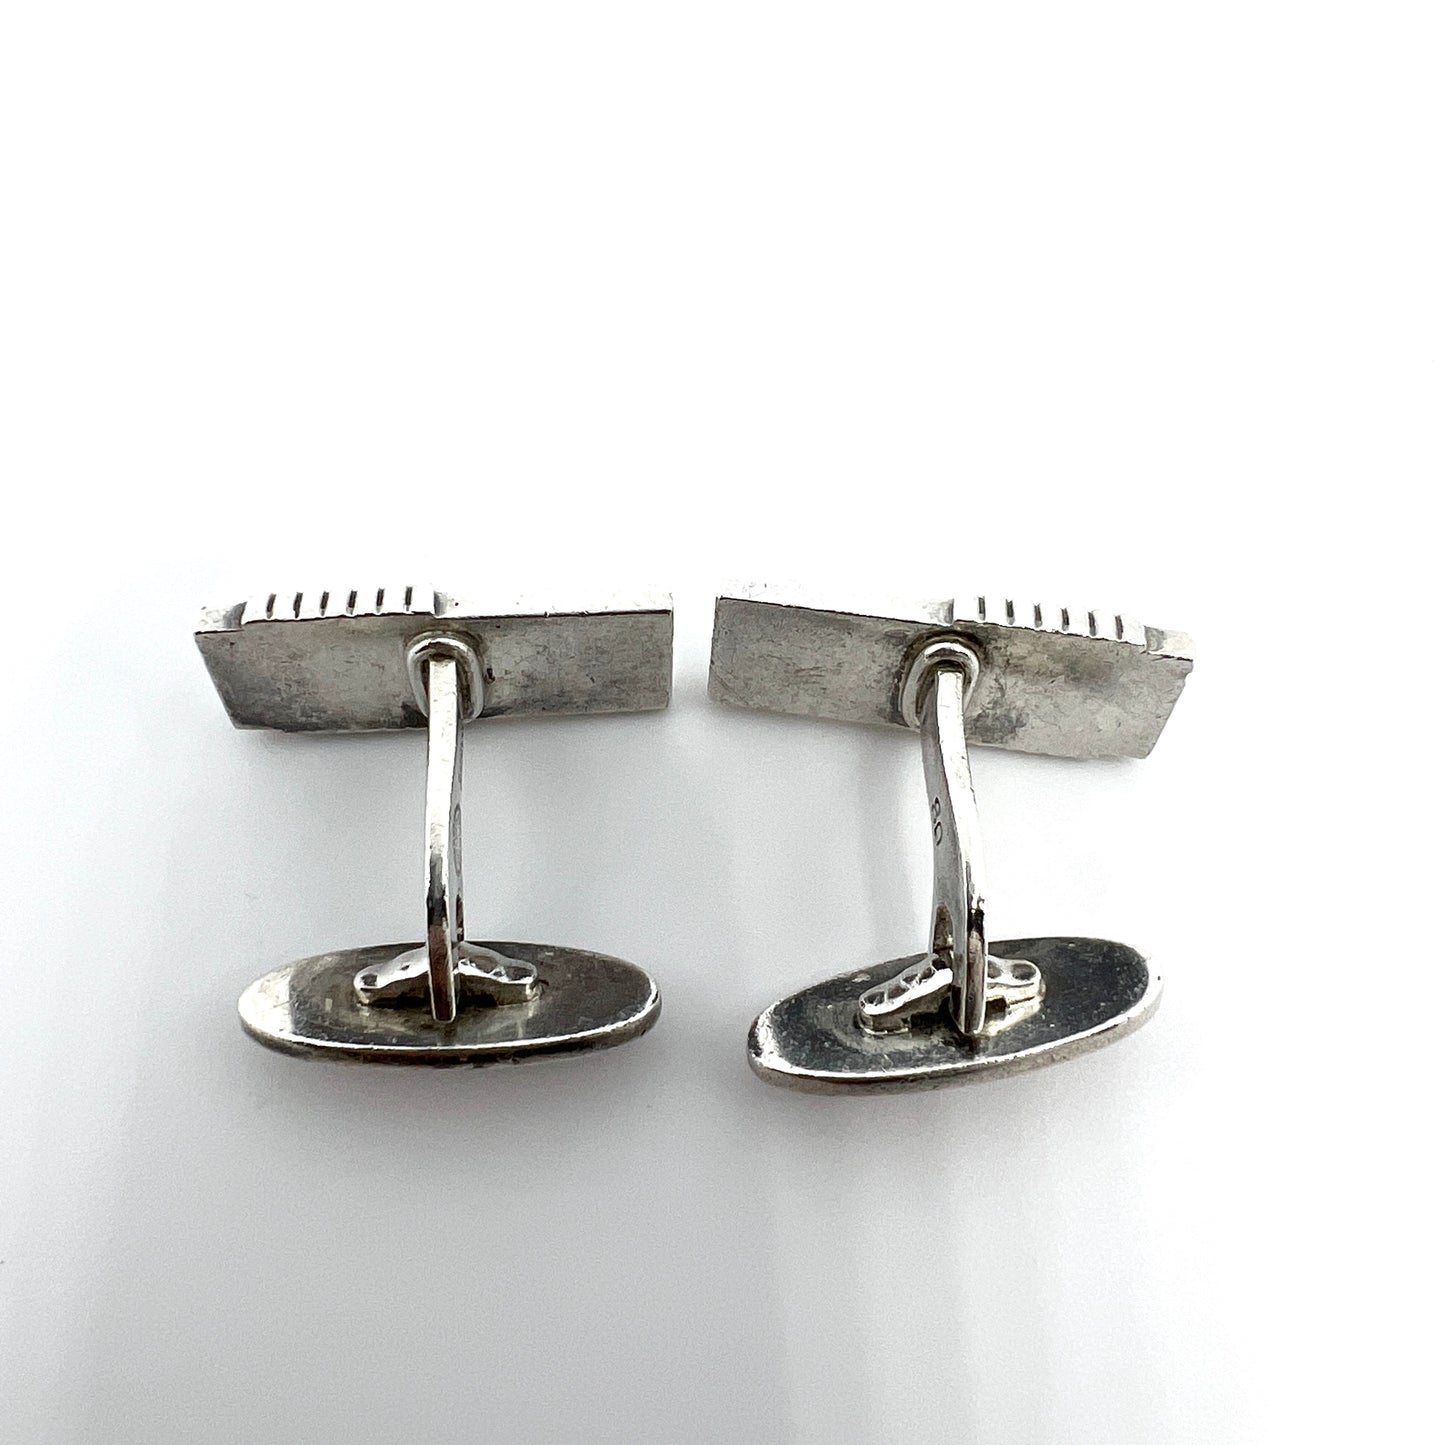 Georg Jensen, Denmark. Vintage Sterling Silver Cufflinks. Design 80 by Harald Nielsen.